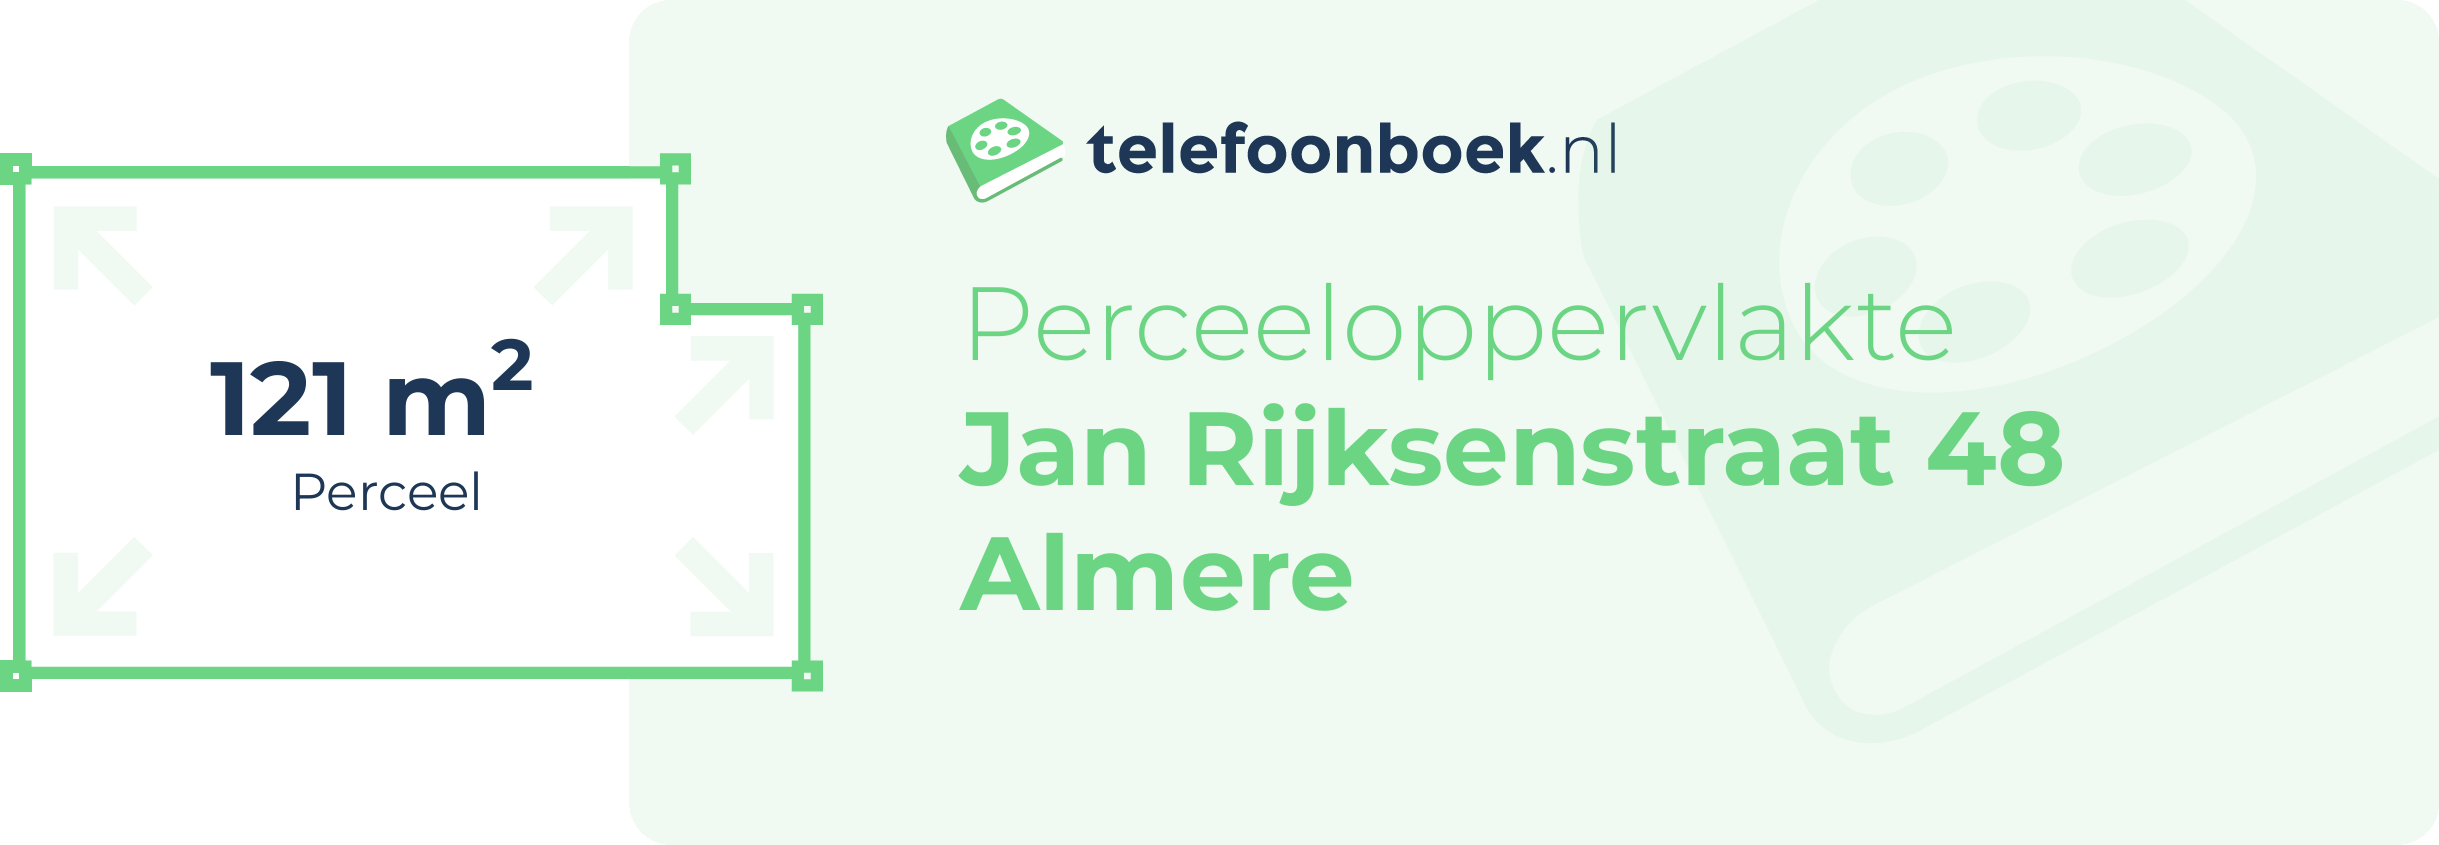 Perceeloppervlakte Jan Rijksenstraat 48 Almere